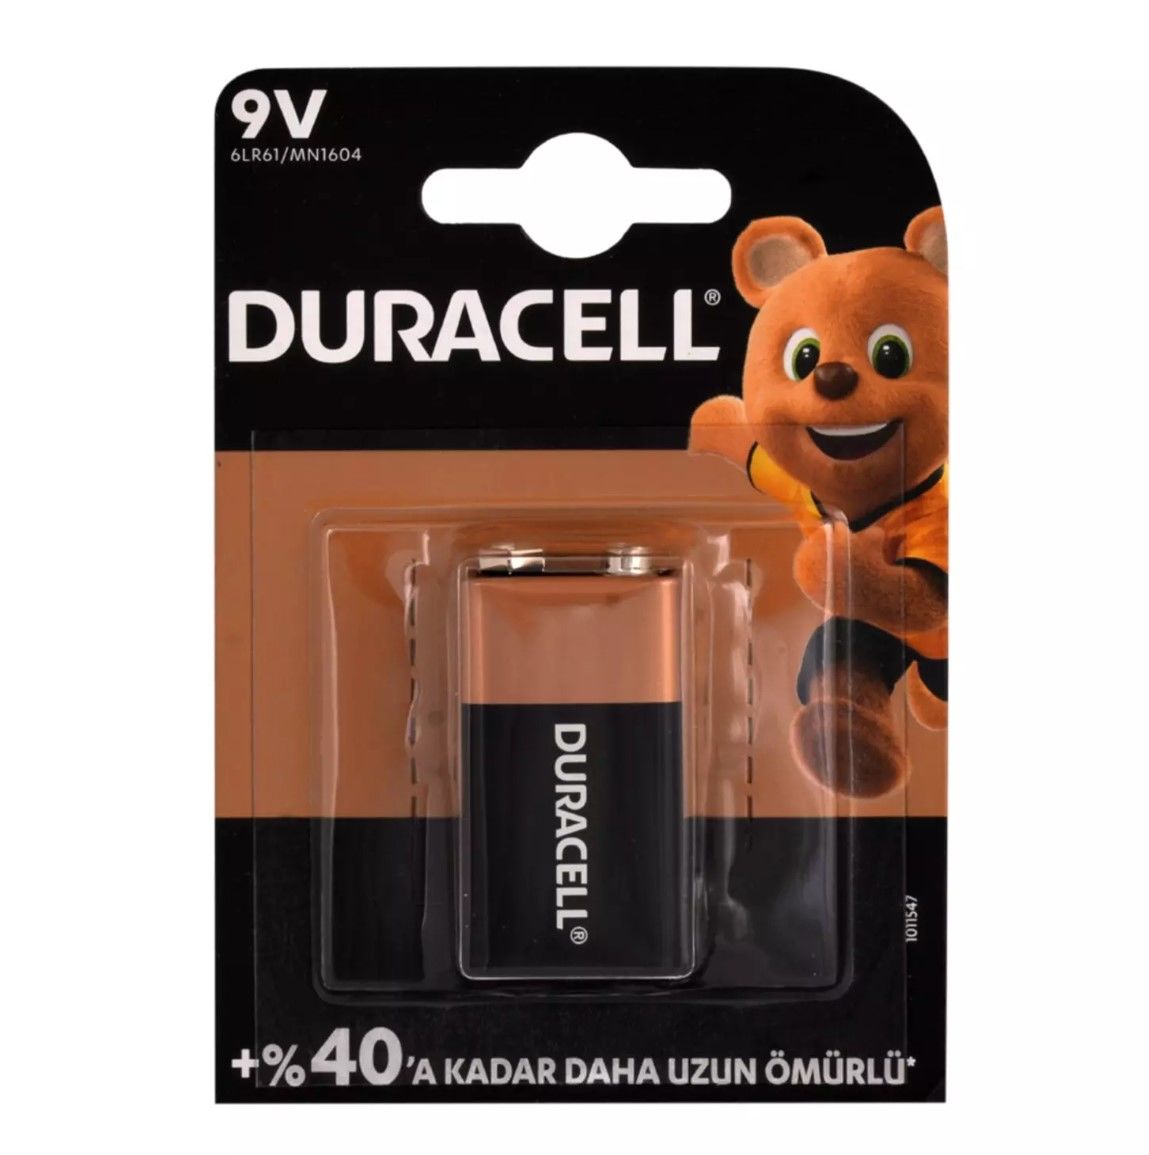 Duracell 9V Pil Alkalin 1li 35503012